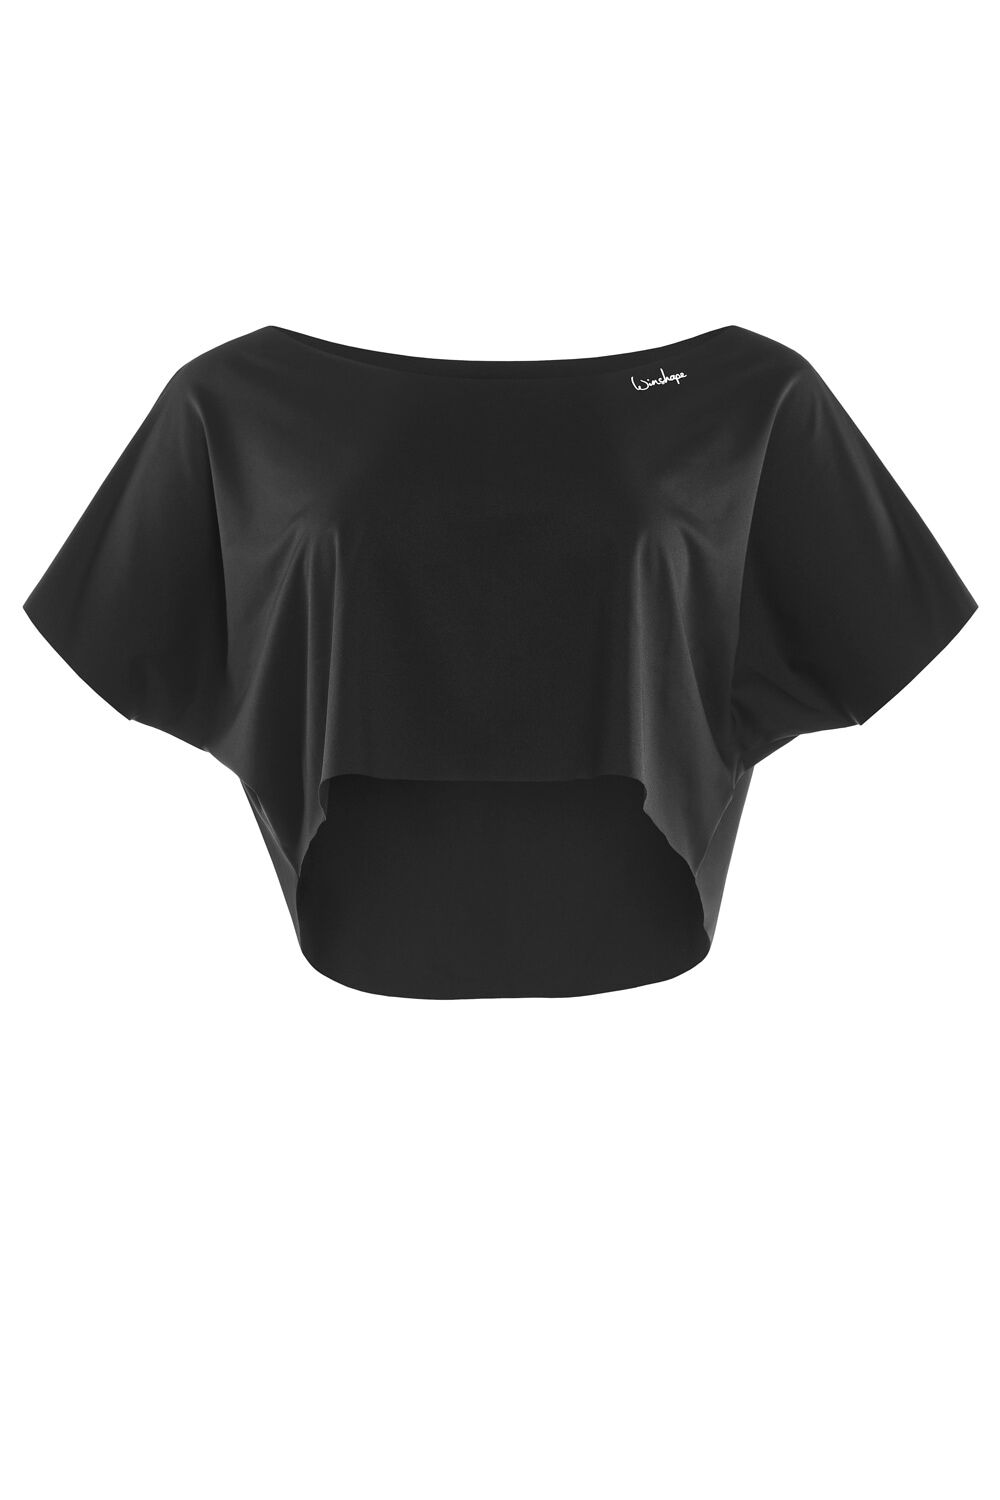 Winshape Oversize-Shirt »DT104«, Functional schwarz Größe 34/36 36/38 38/40 42/44 44/46 46/48